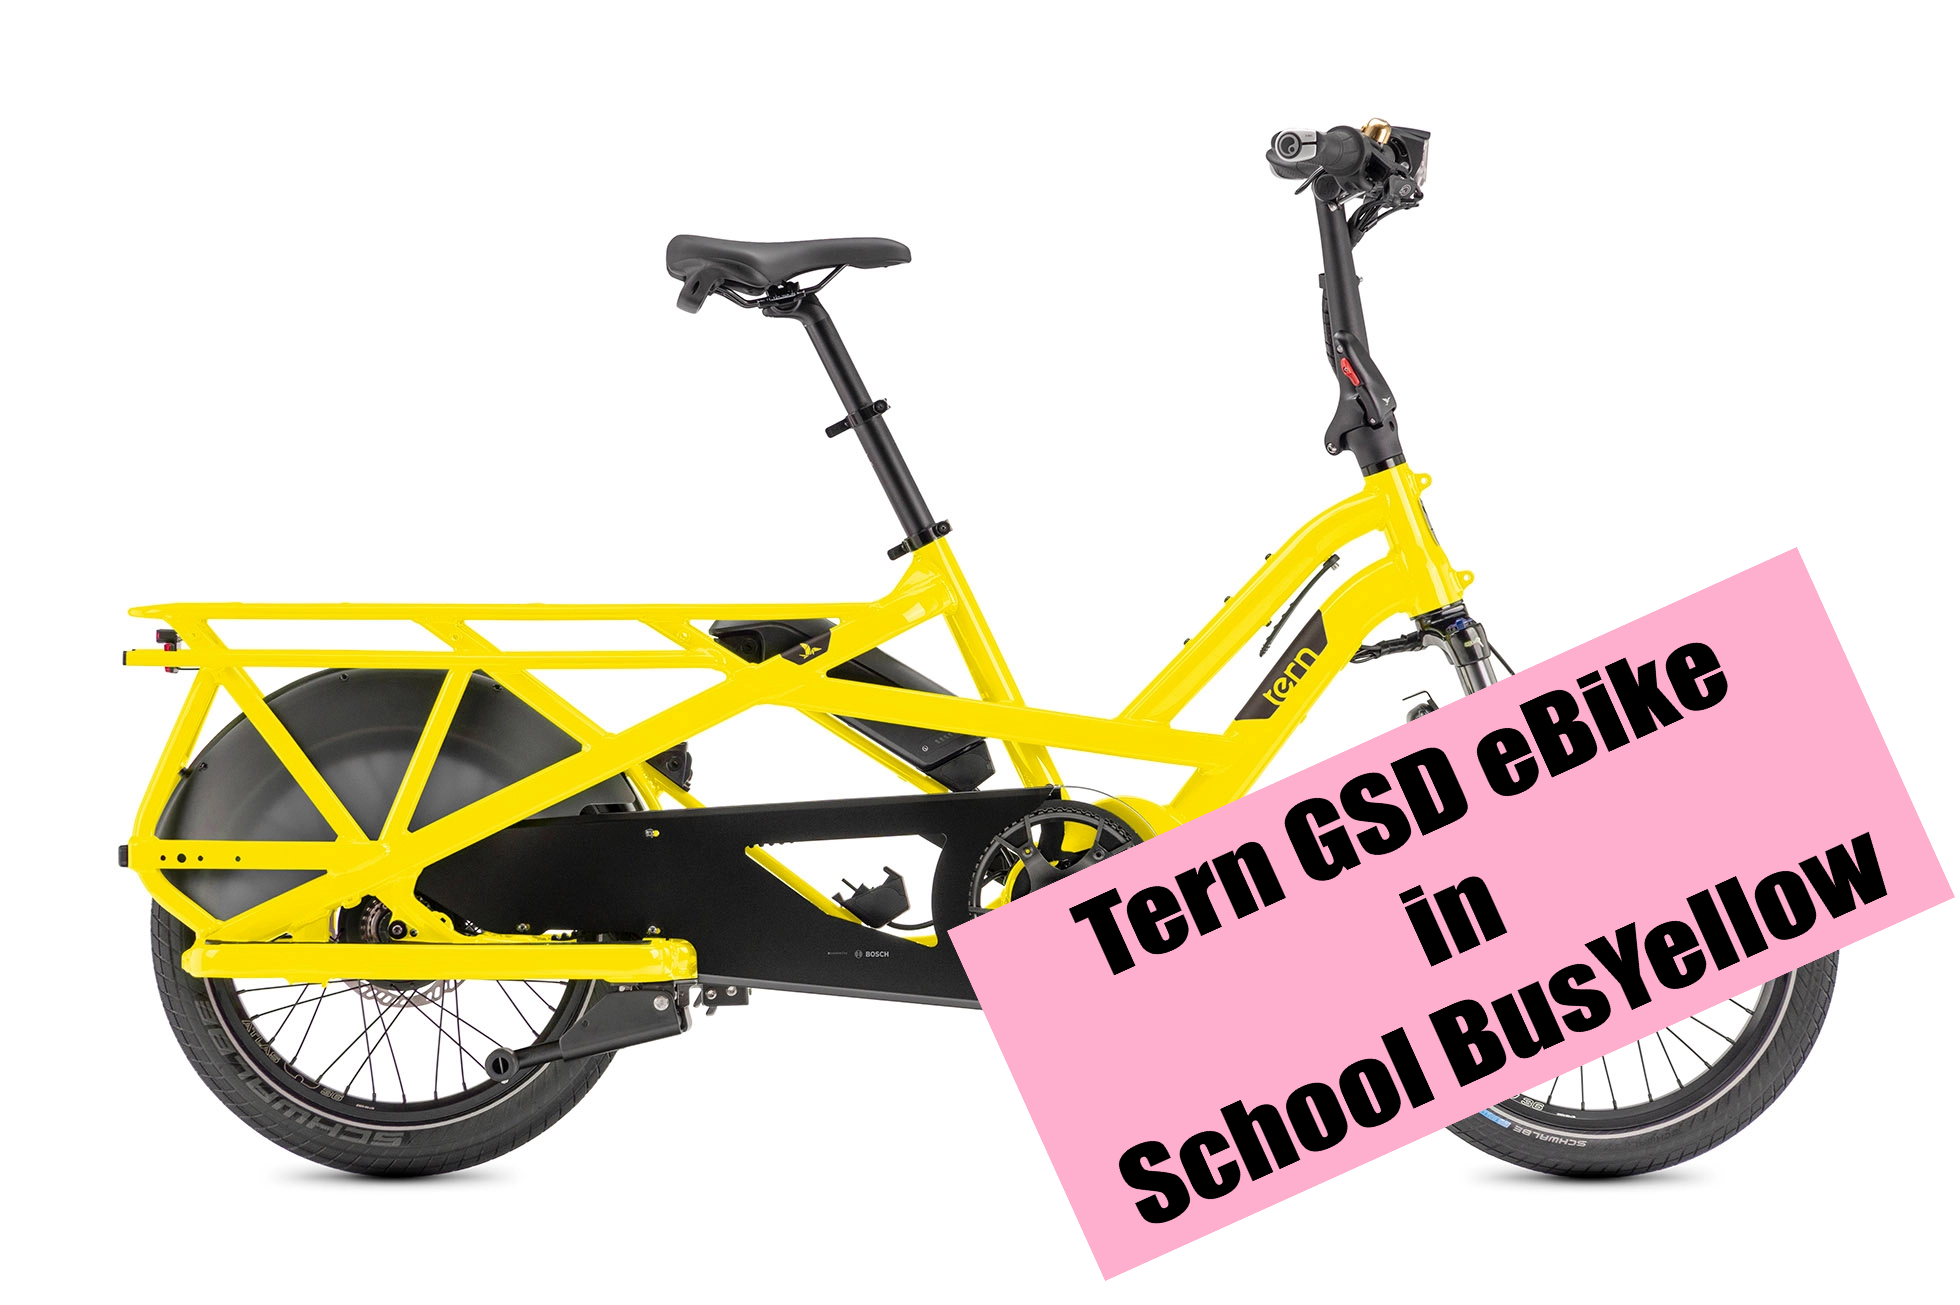 Tern GSD in School Bus Yellow